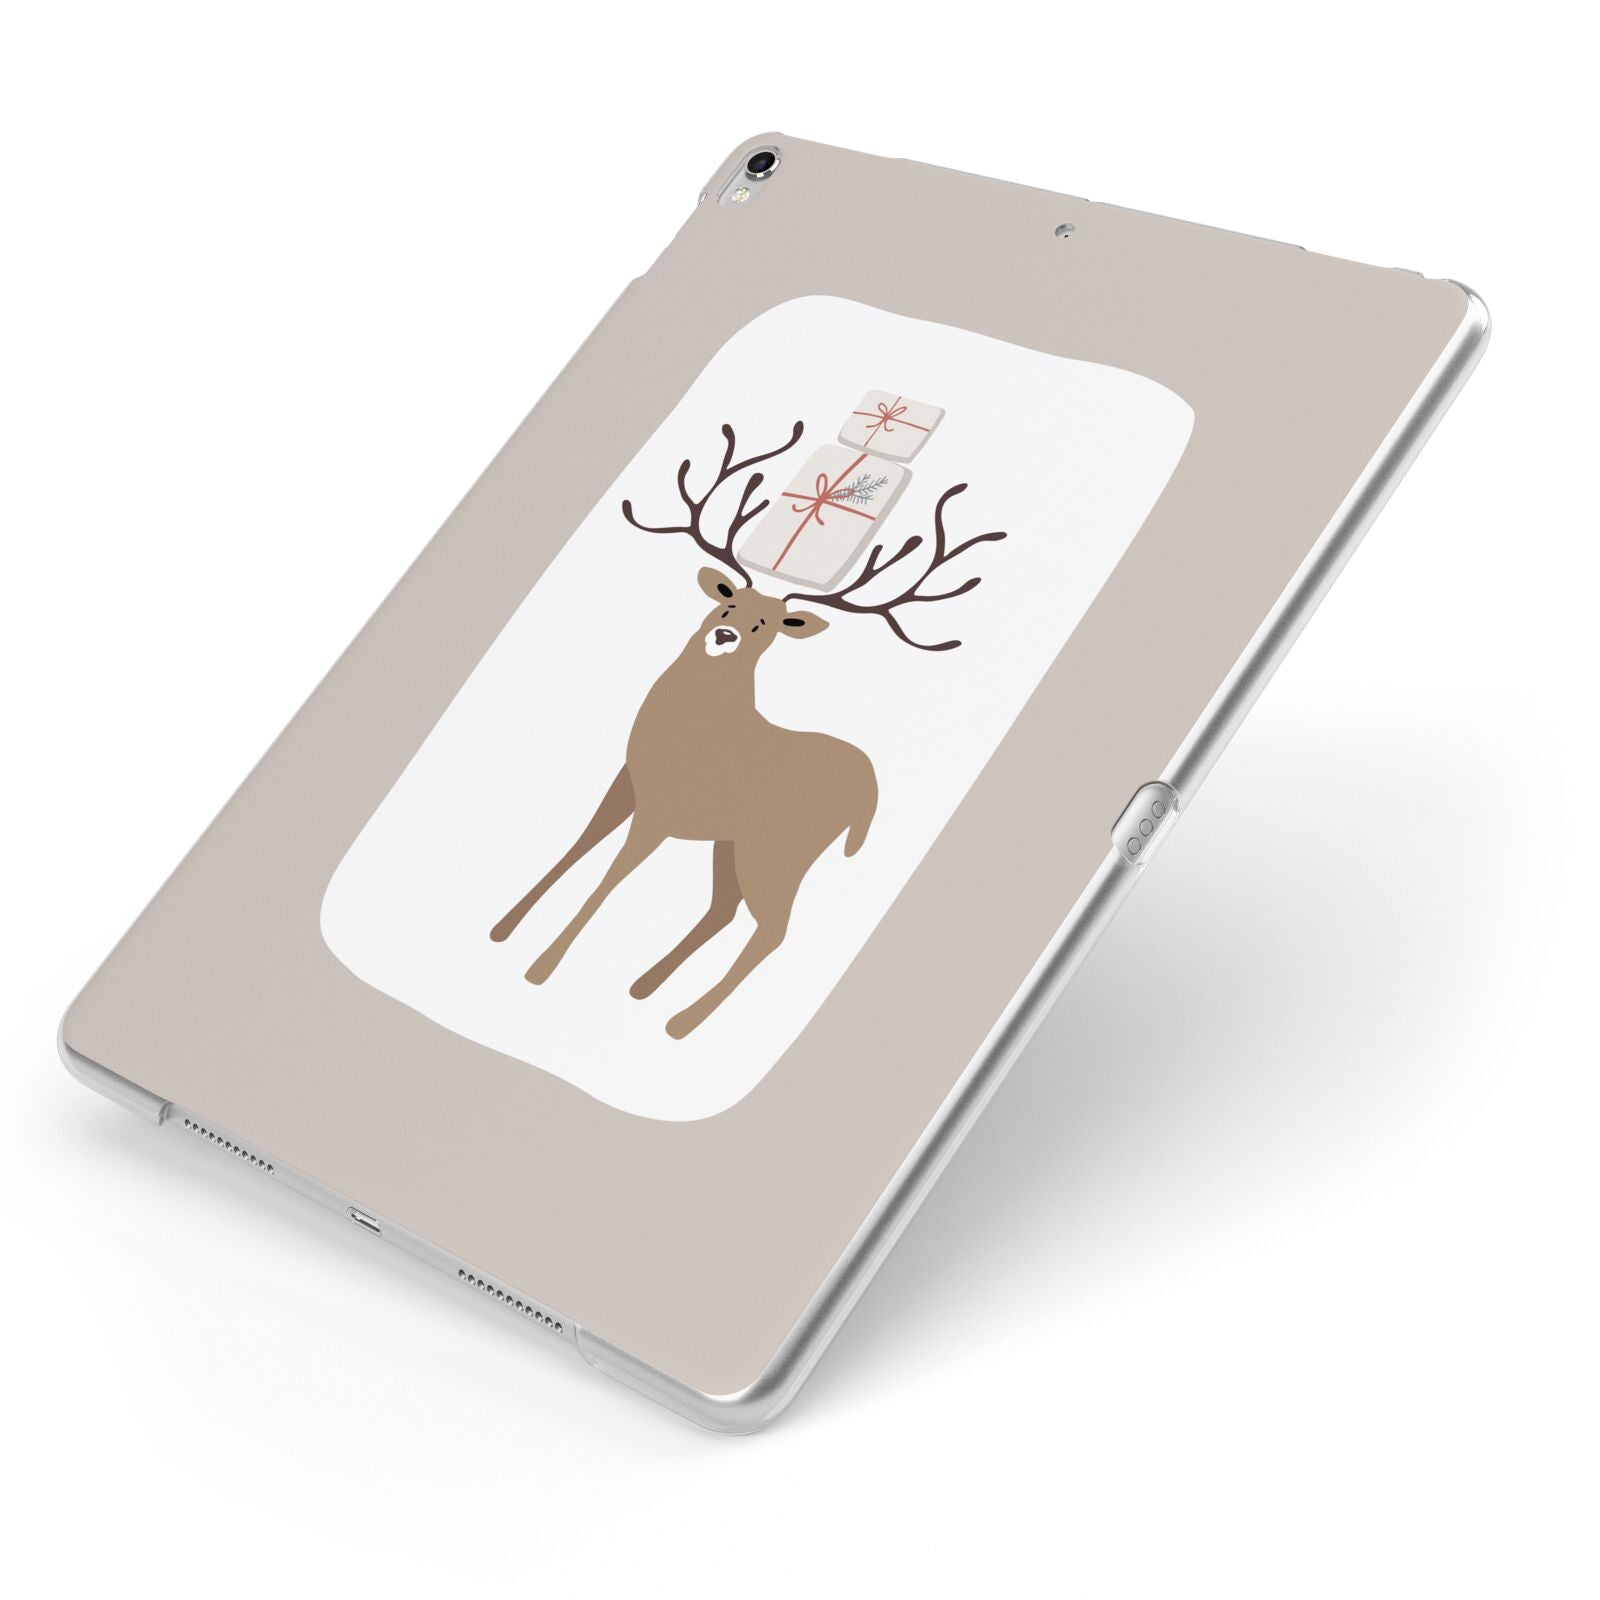 Reindeer Presents Apple iPad Case on Silver iPad Side View